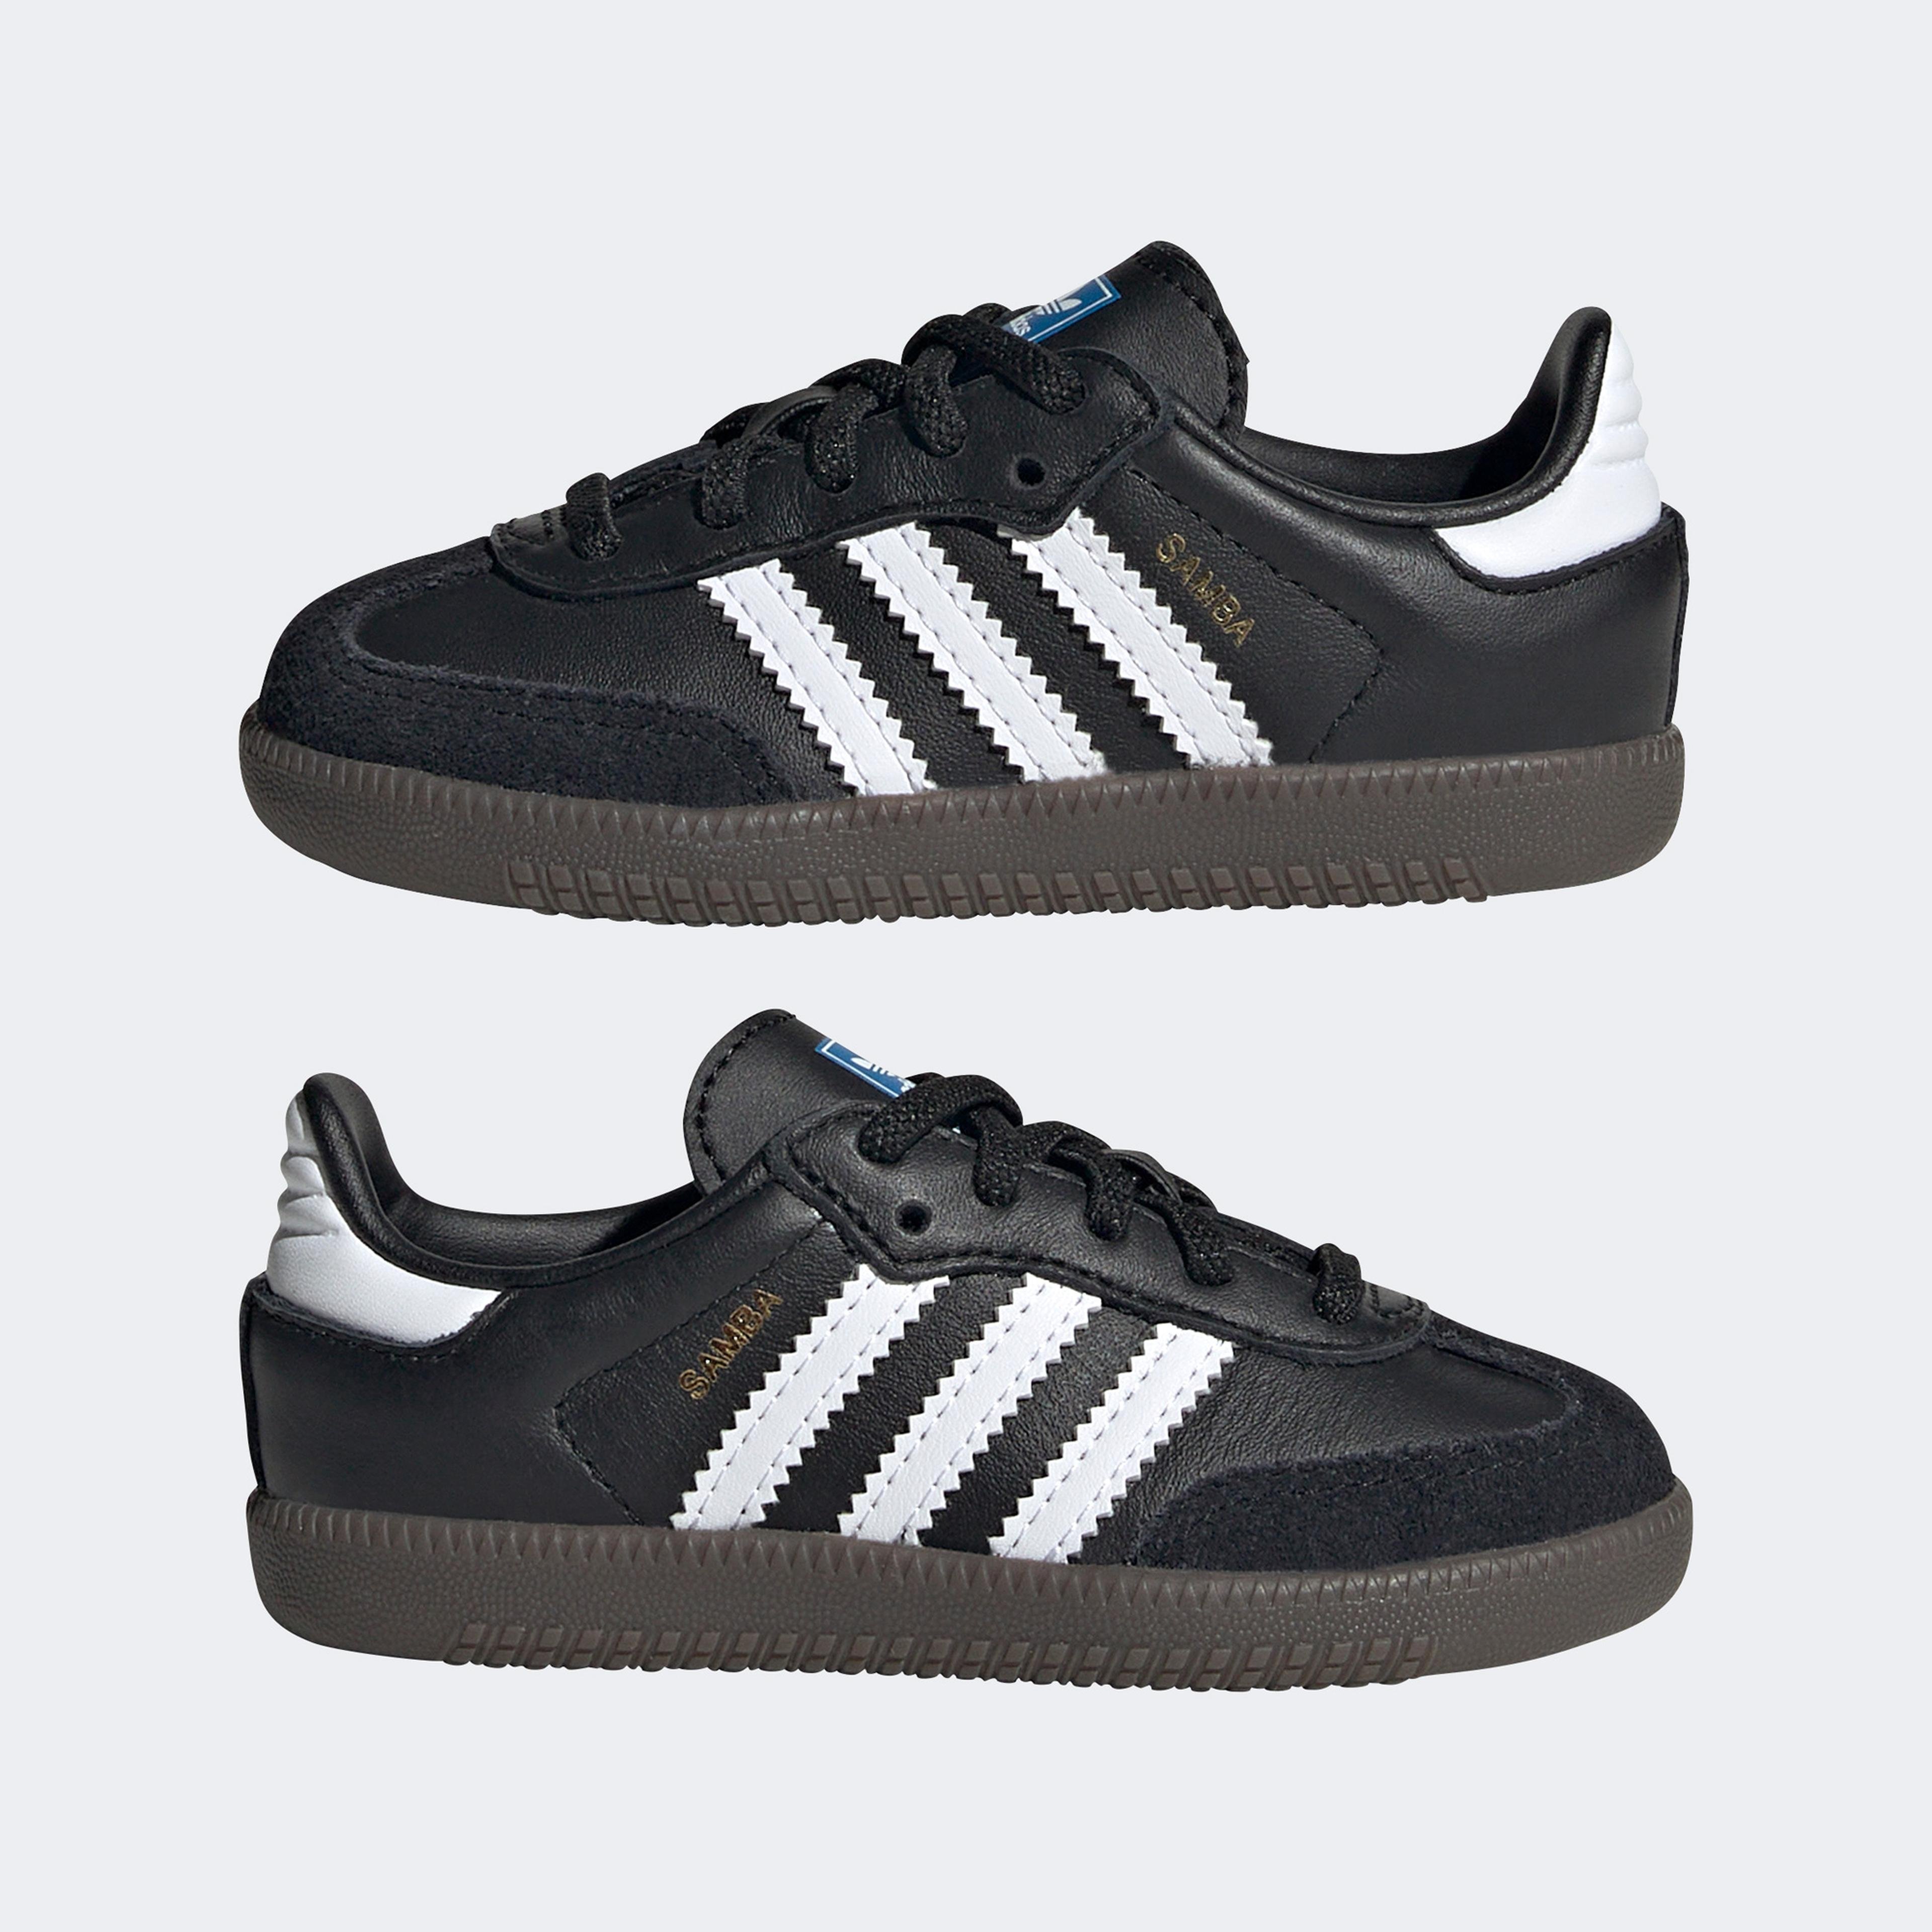 adidas Originals Samba Og El Bebek Siyah Spor Ayakkabı